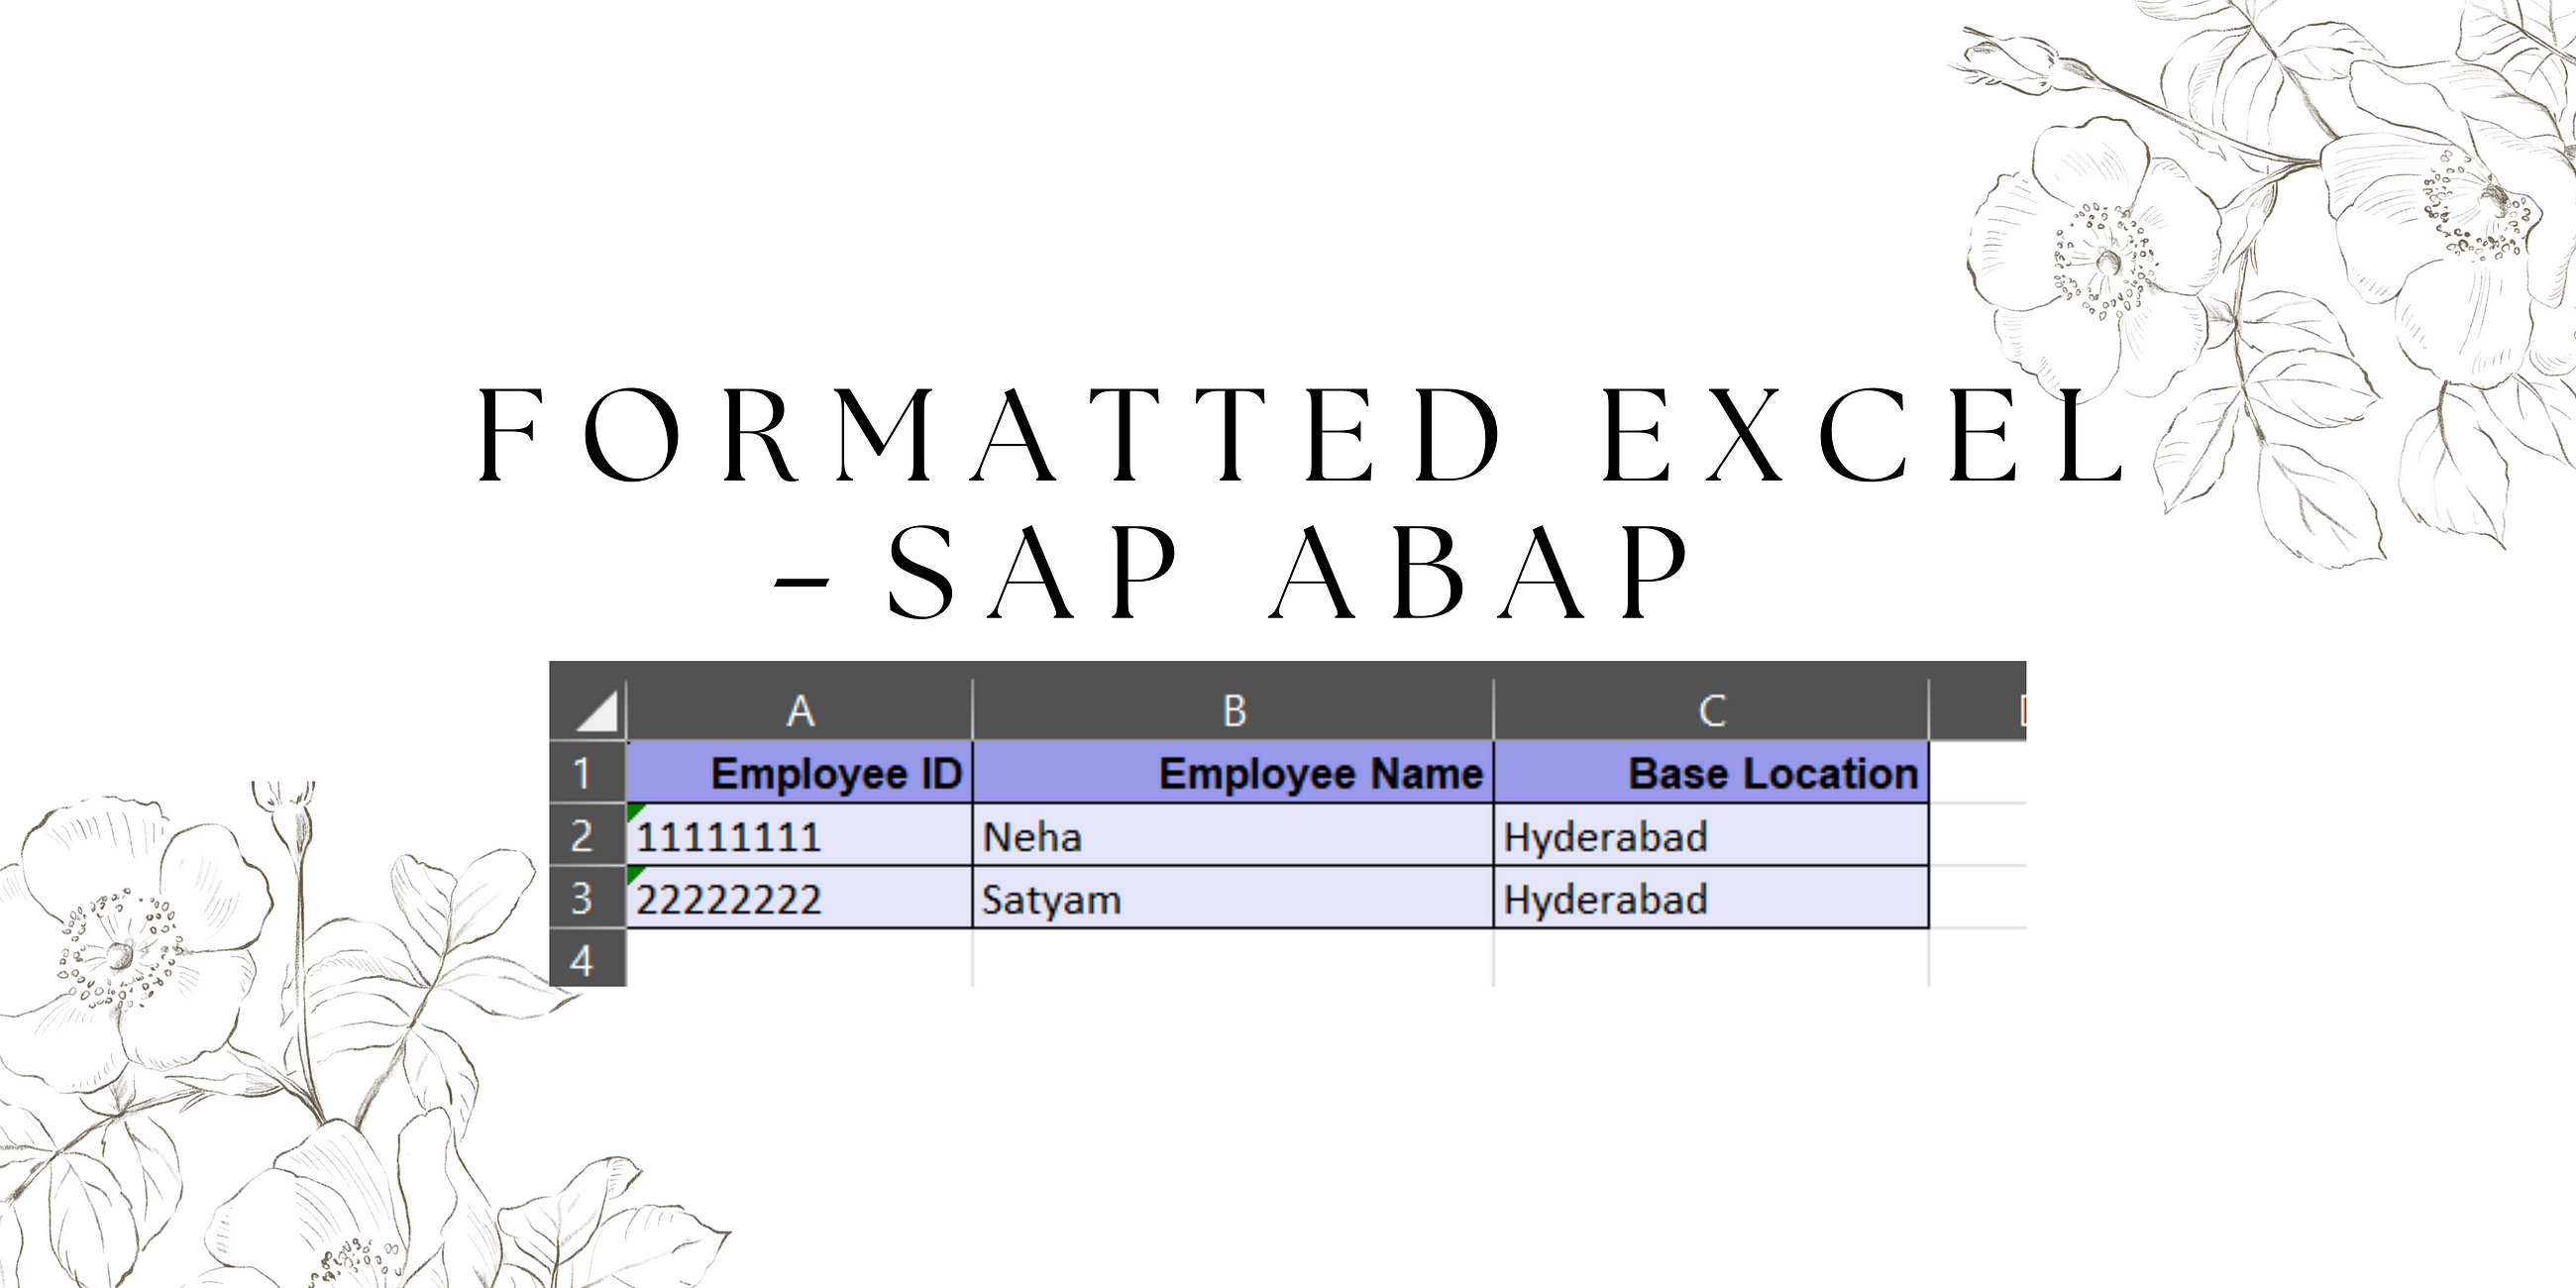 FORMATTED EXCEL — SAP ABAP